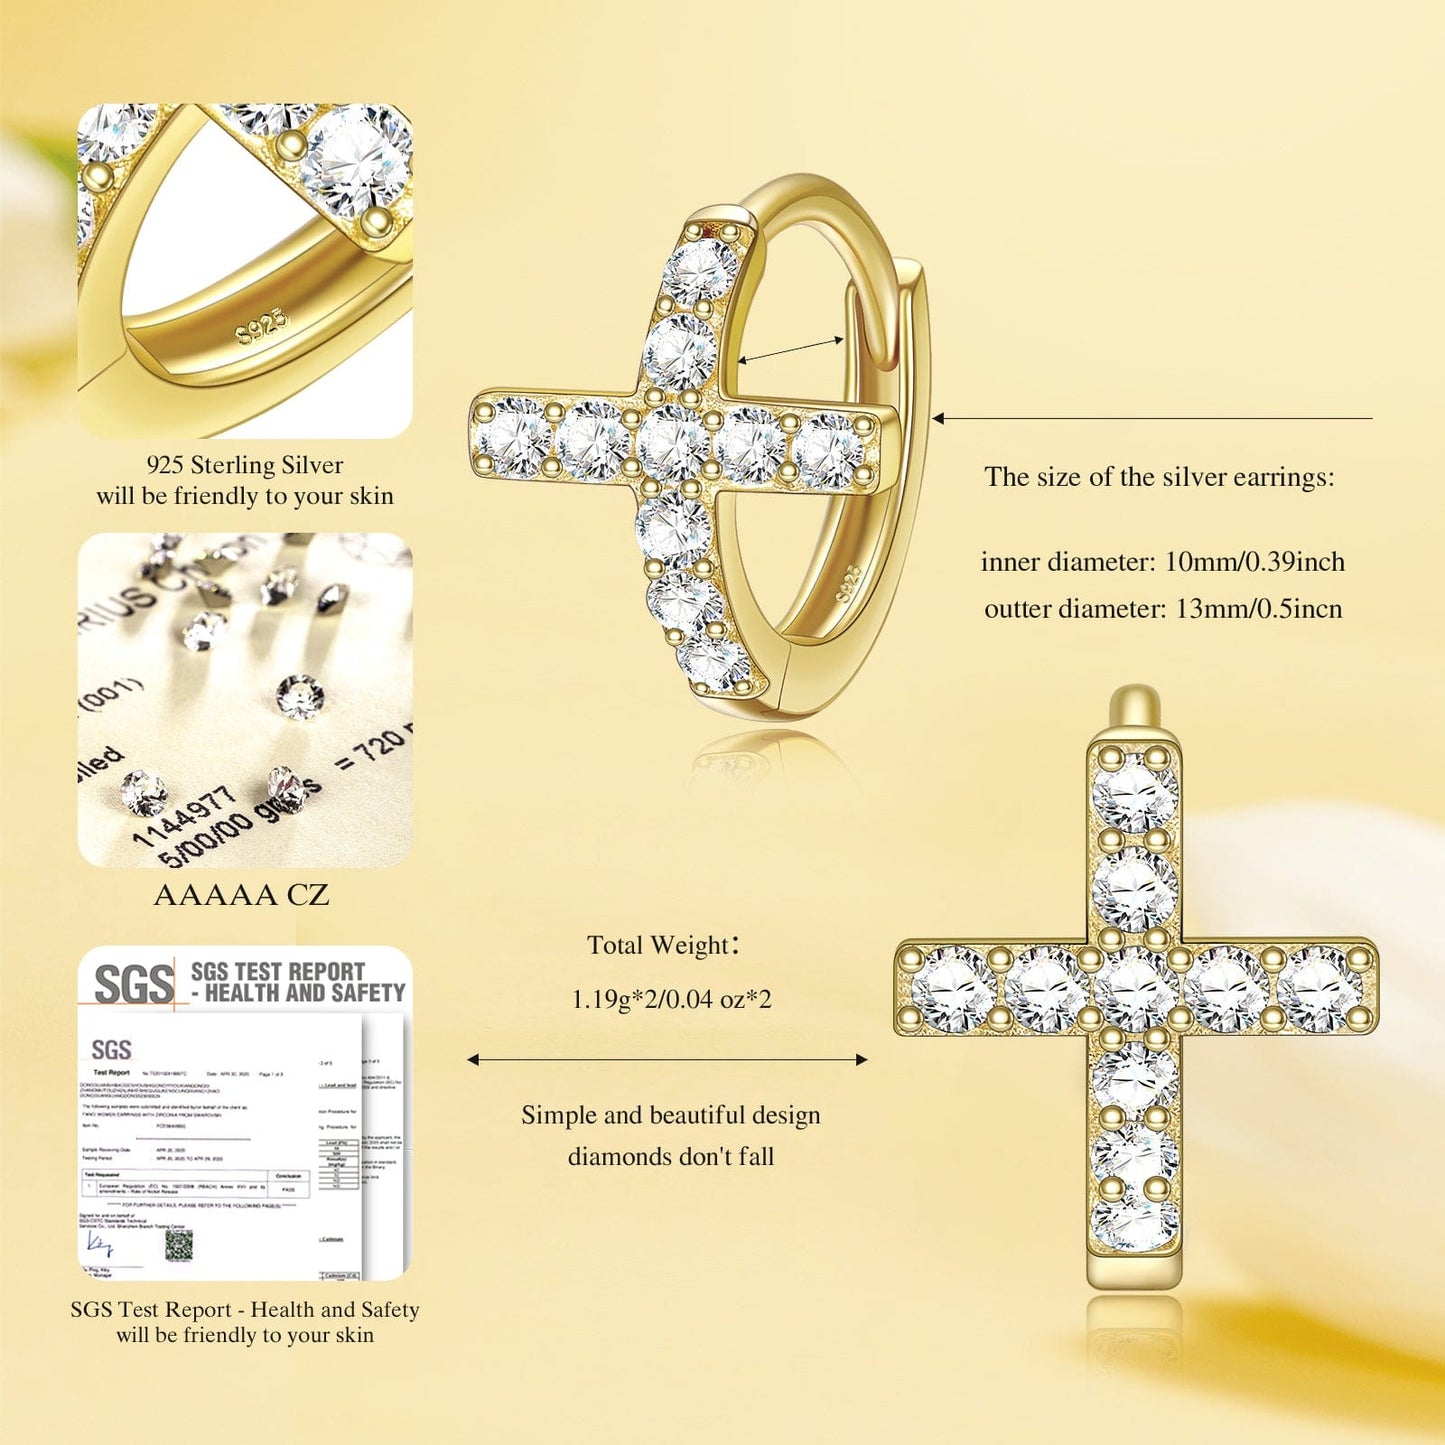 Sterling Silver Personalised Golden Cross Earrings In 14K Gold Plated